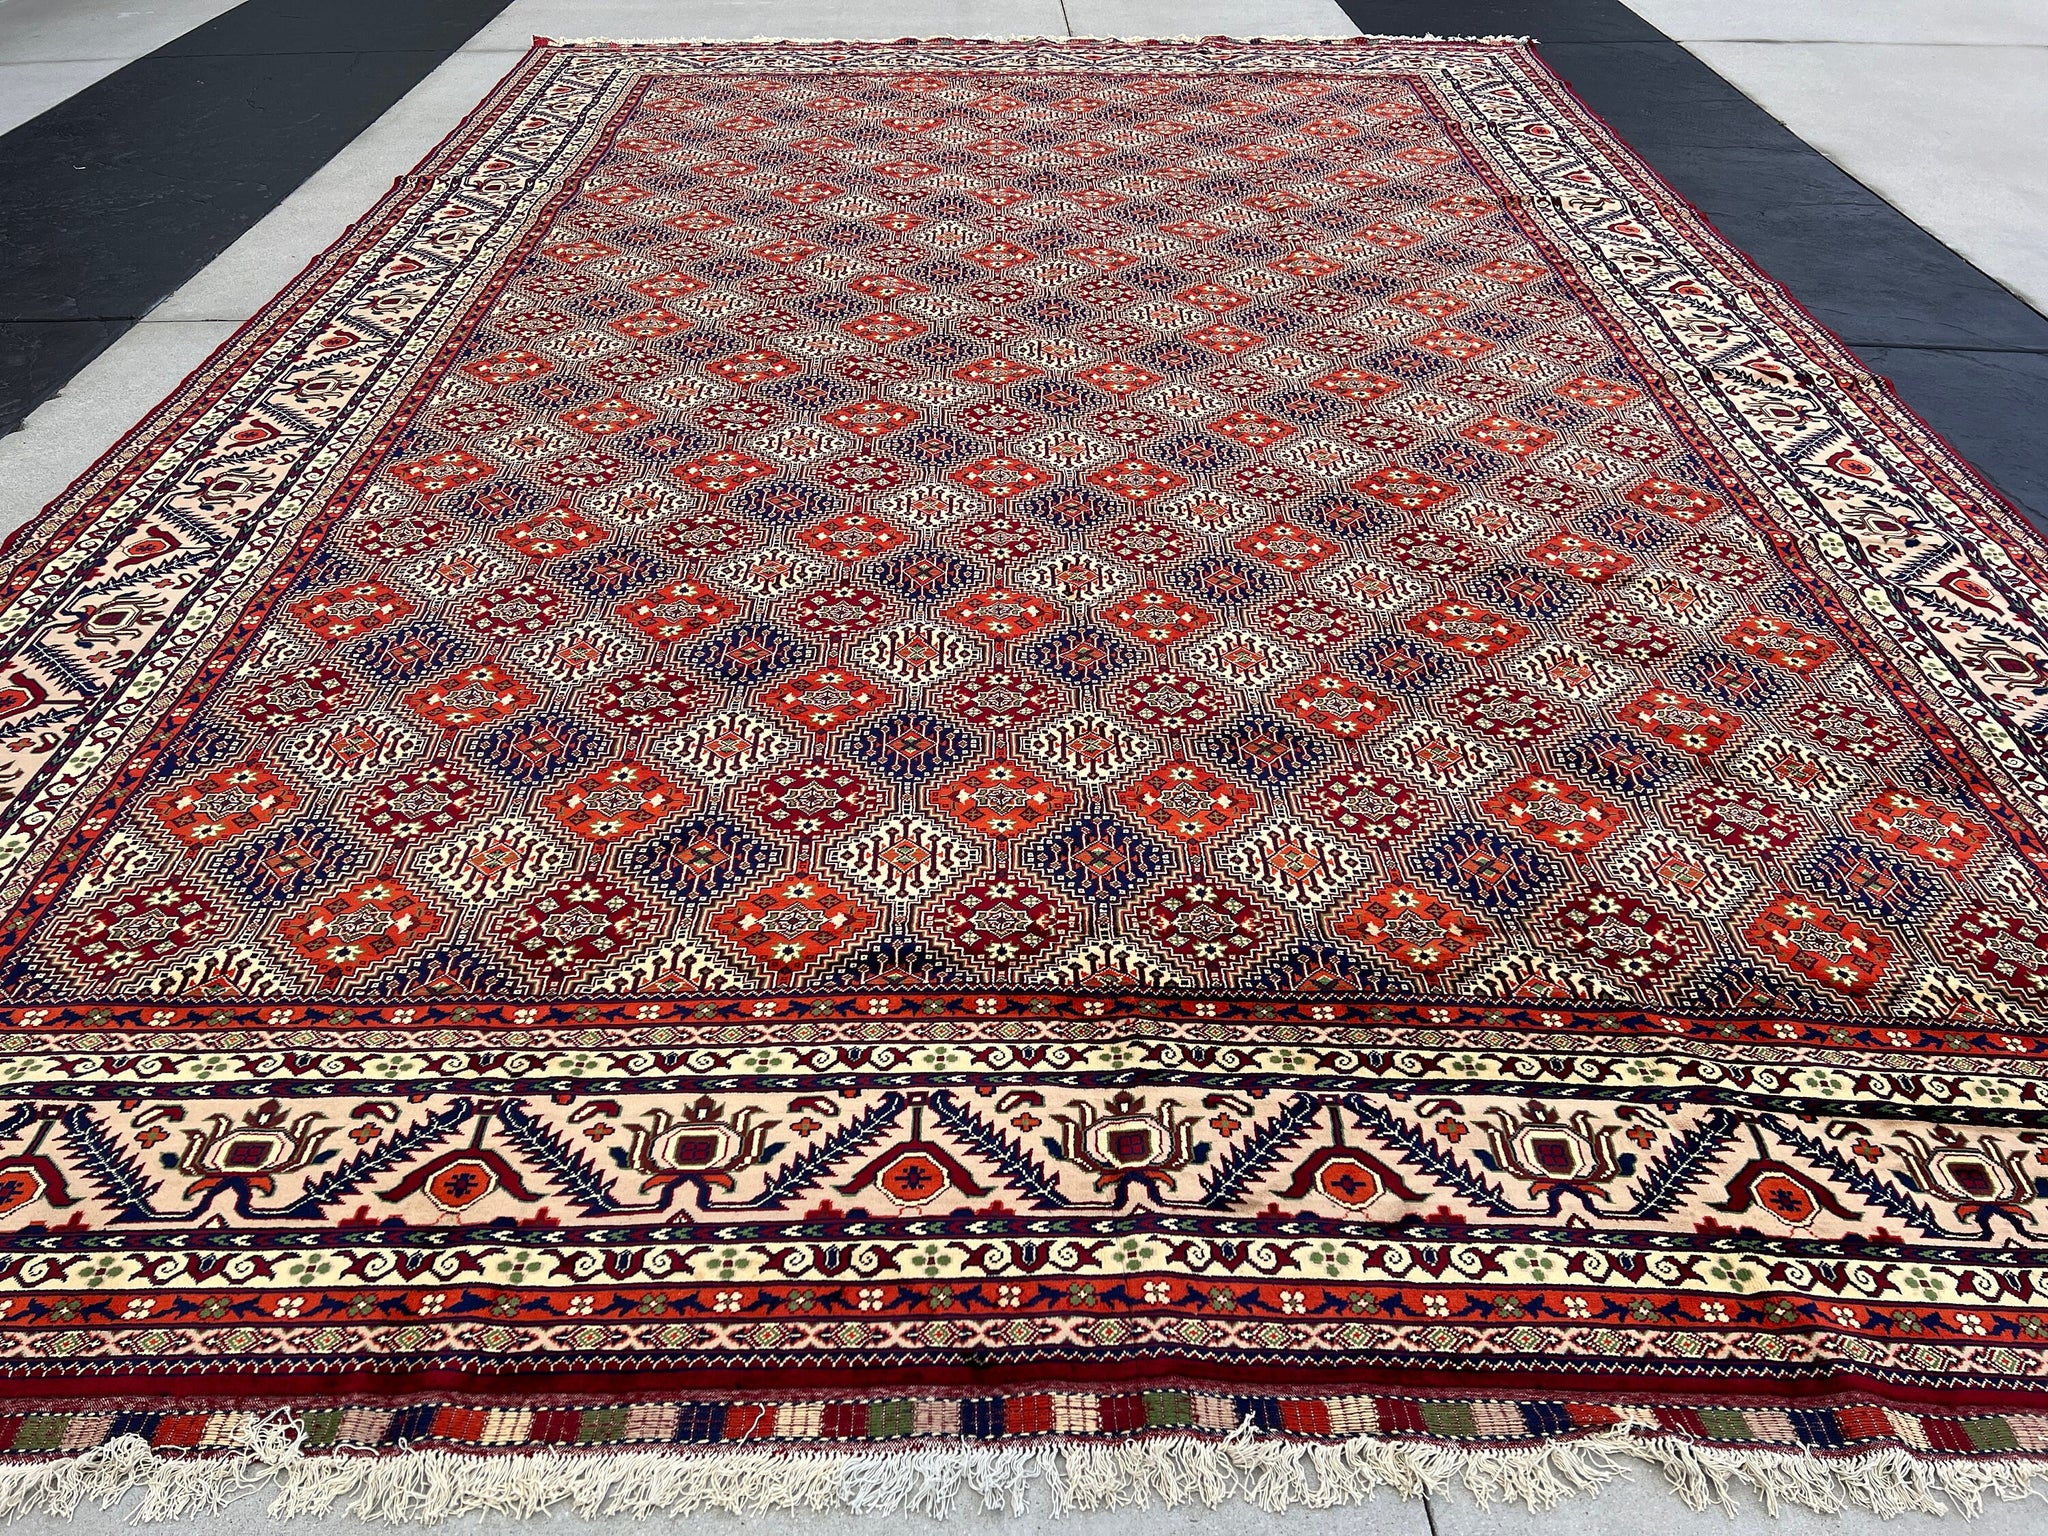 13x20 Handmade Afghan Rug | Red Maroon Blood Orange Royal Blue Green Teal Turquoise Cream Beige  | Turkish Oushak Boho Bohemian